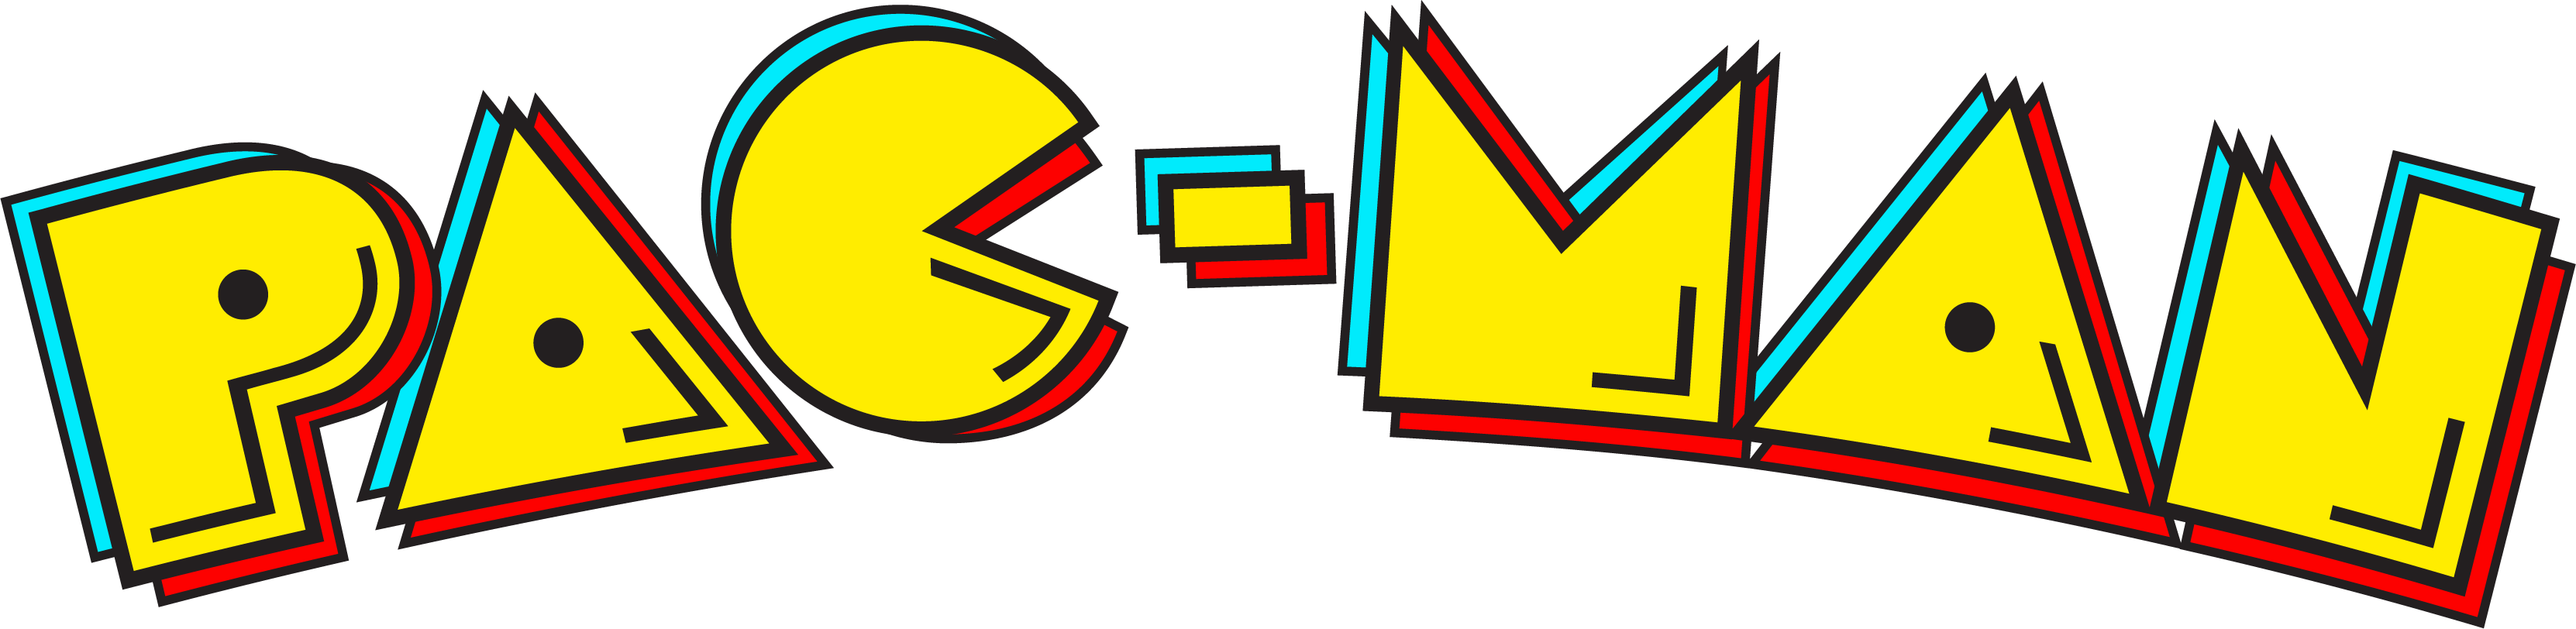 Pacman0.51